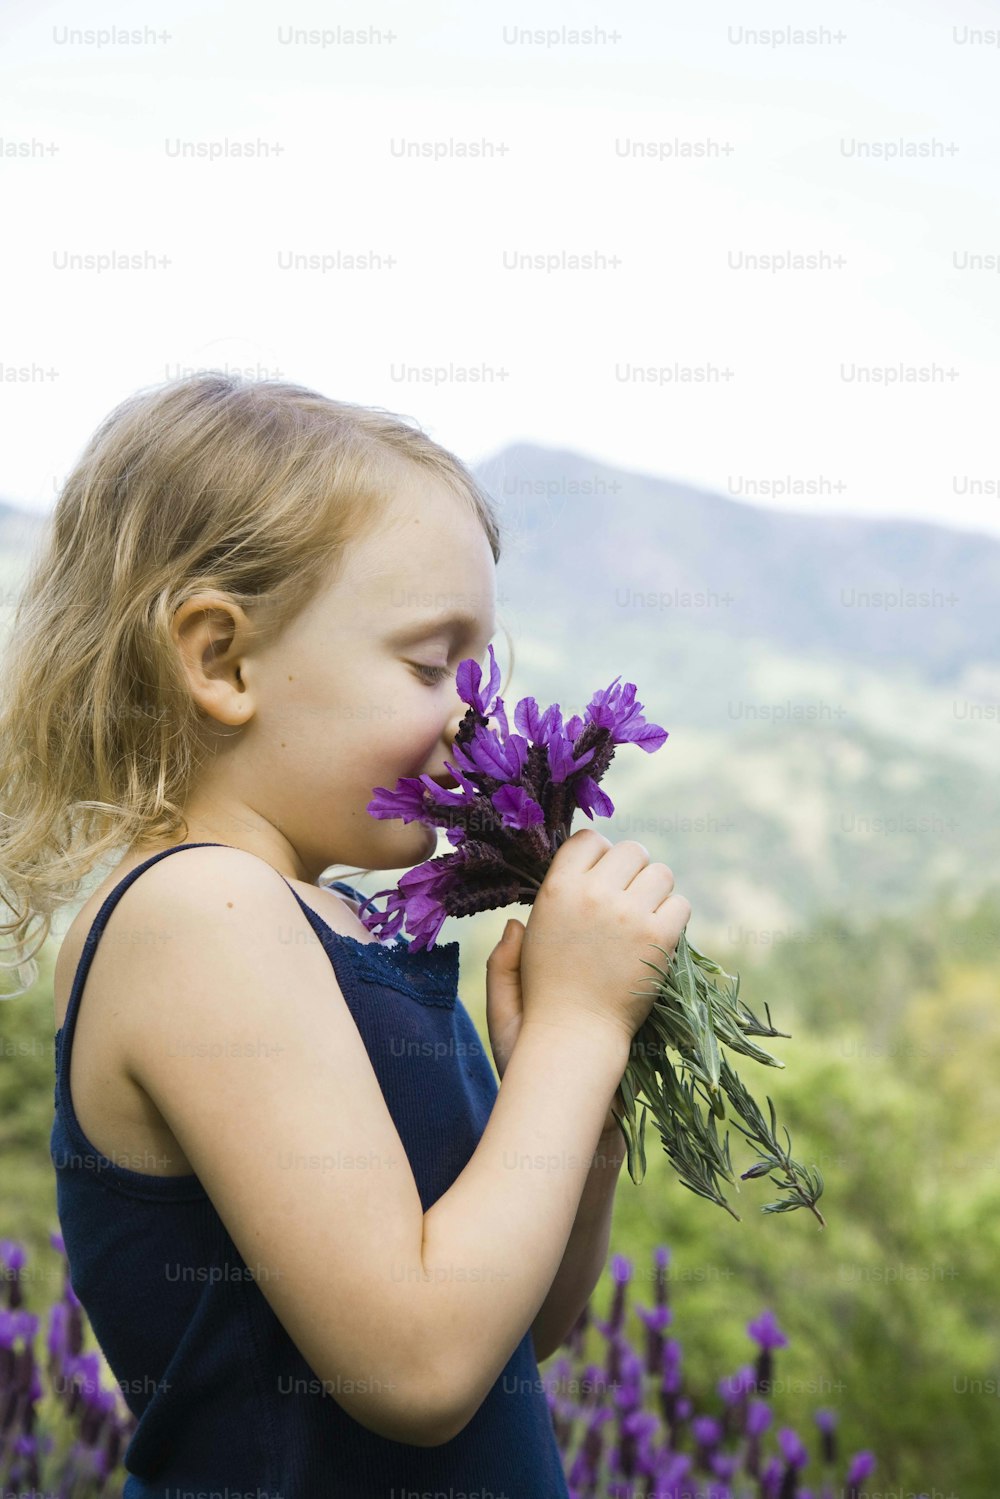 Una niña oliendo un ramo de flores púrpuras